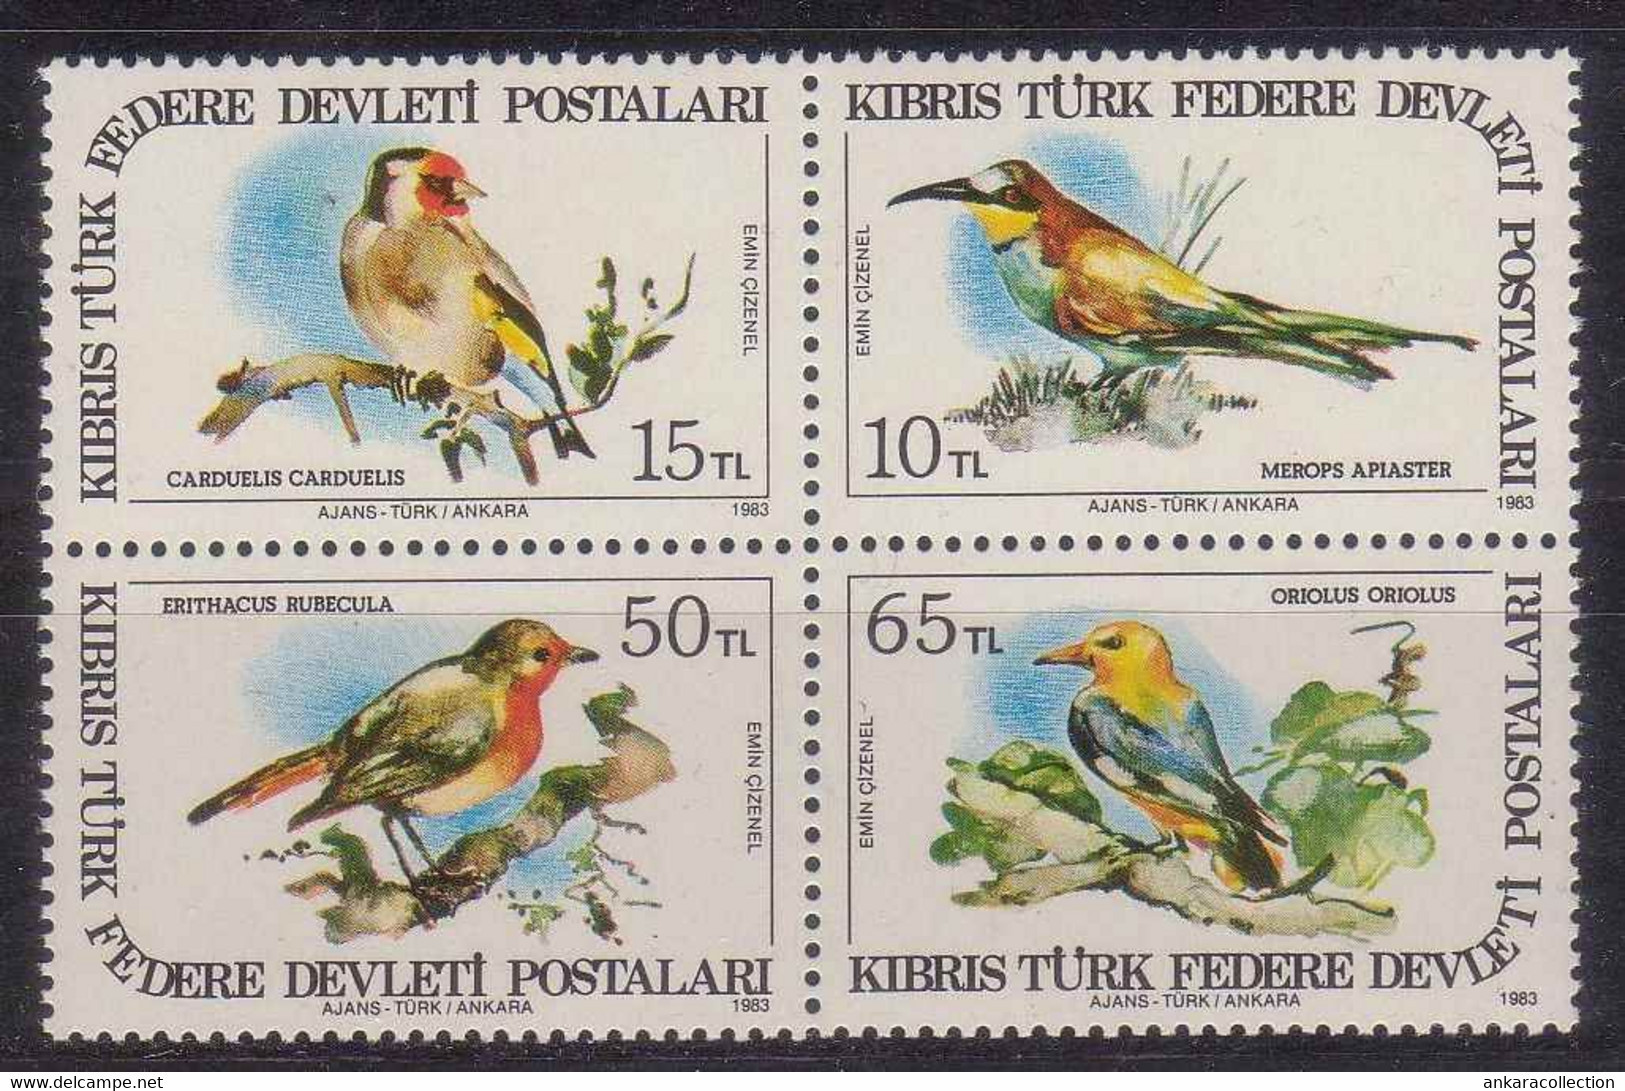 AC - NORTHERN CYPRUS STAMP - BIRDS MNH 10 OCTOBER 1983 - Nuevos